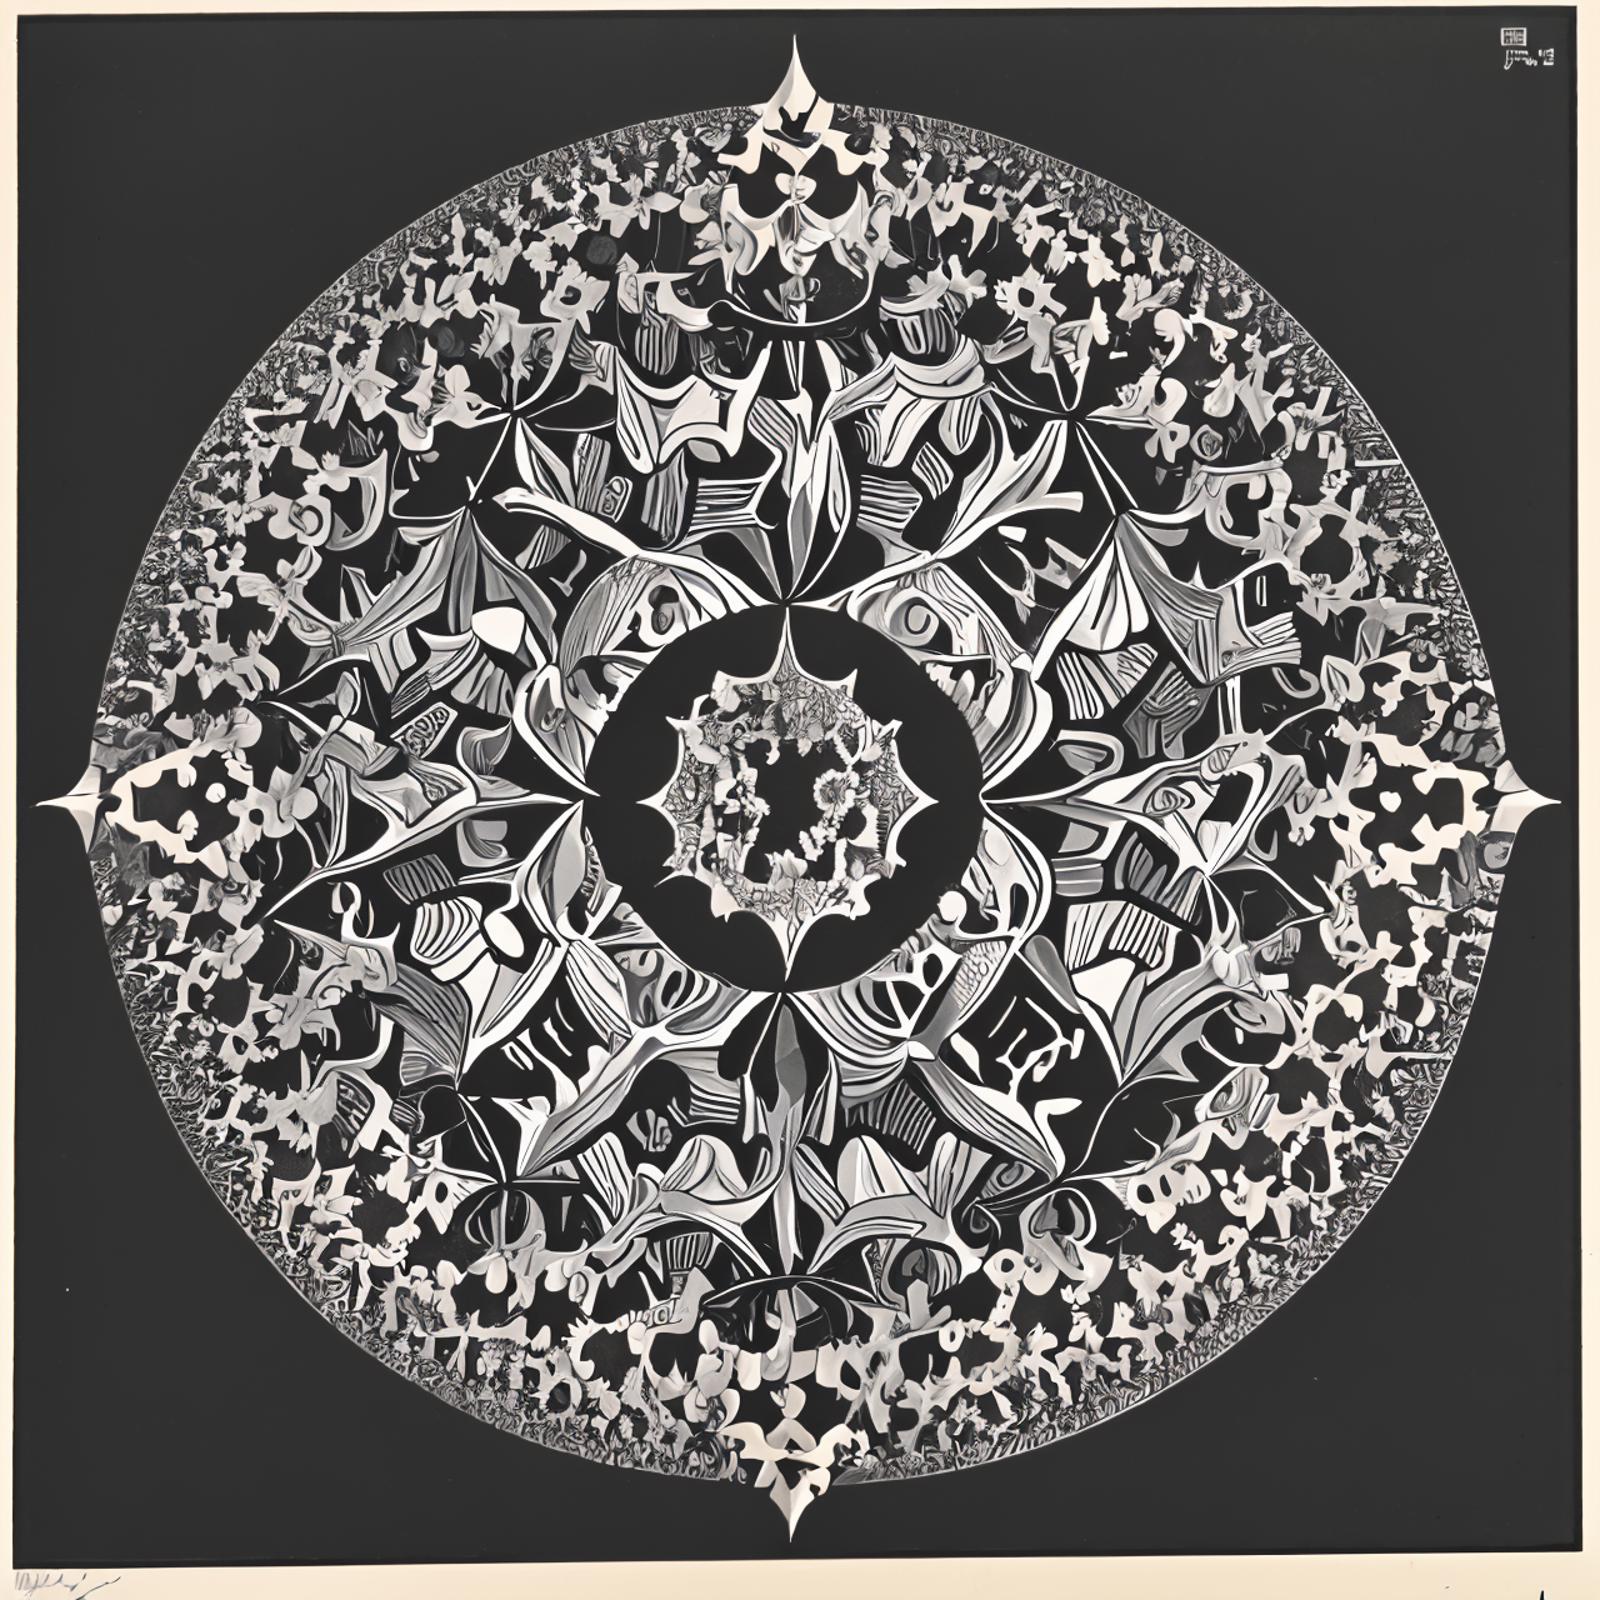 Escher illustrations image by zouguojun